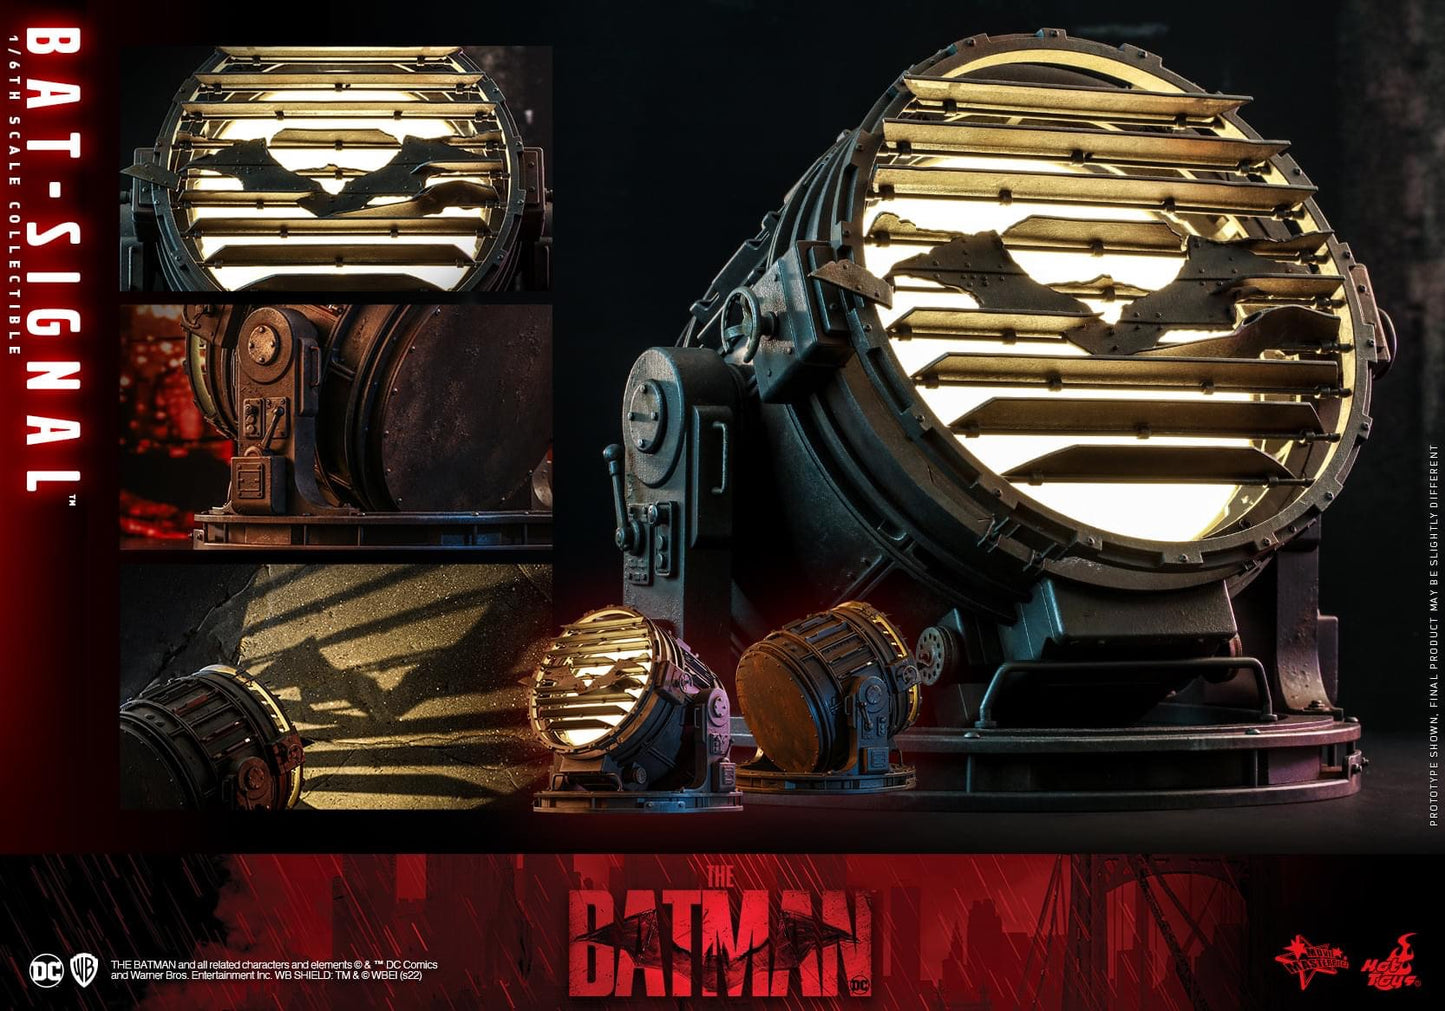 Preventa Bat-Signal - The Batman marca Hot Toys MMS640 escala 1/6